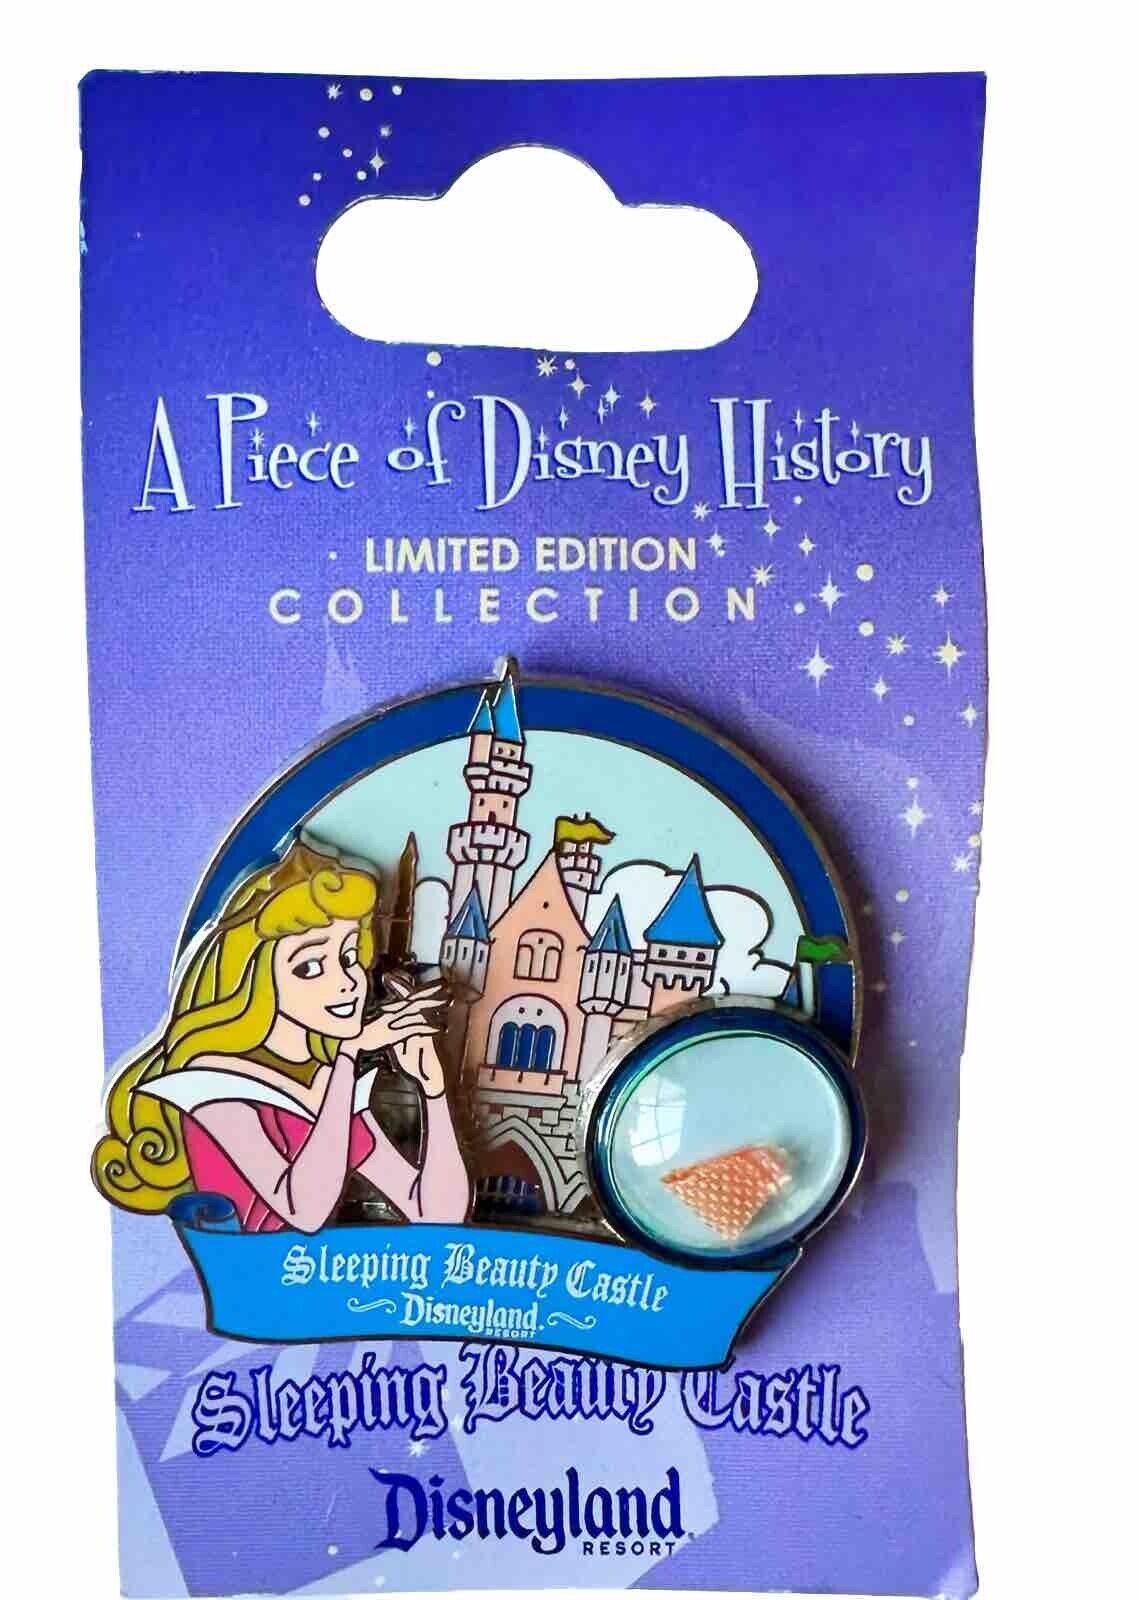 Disney DLR Piece of History Sleeping Beauty Castle Pin LE 1000